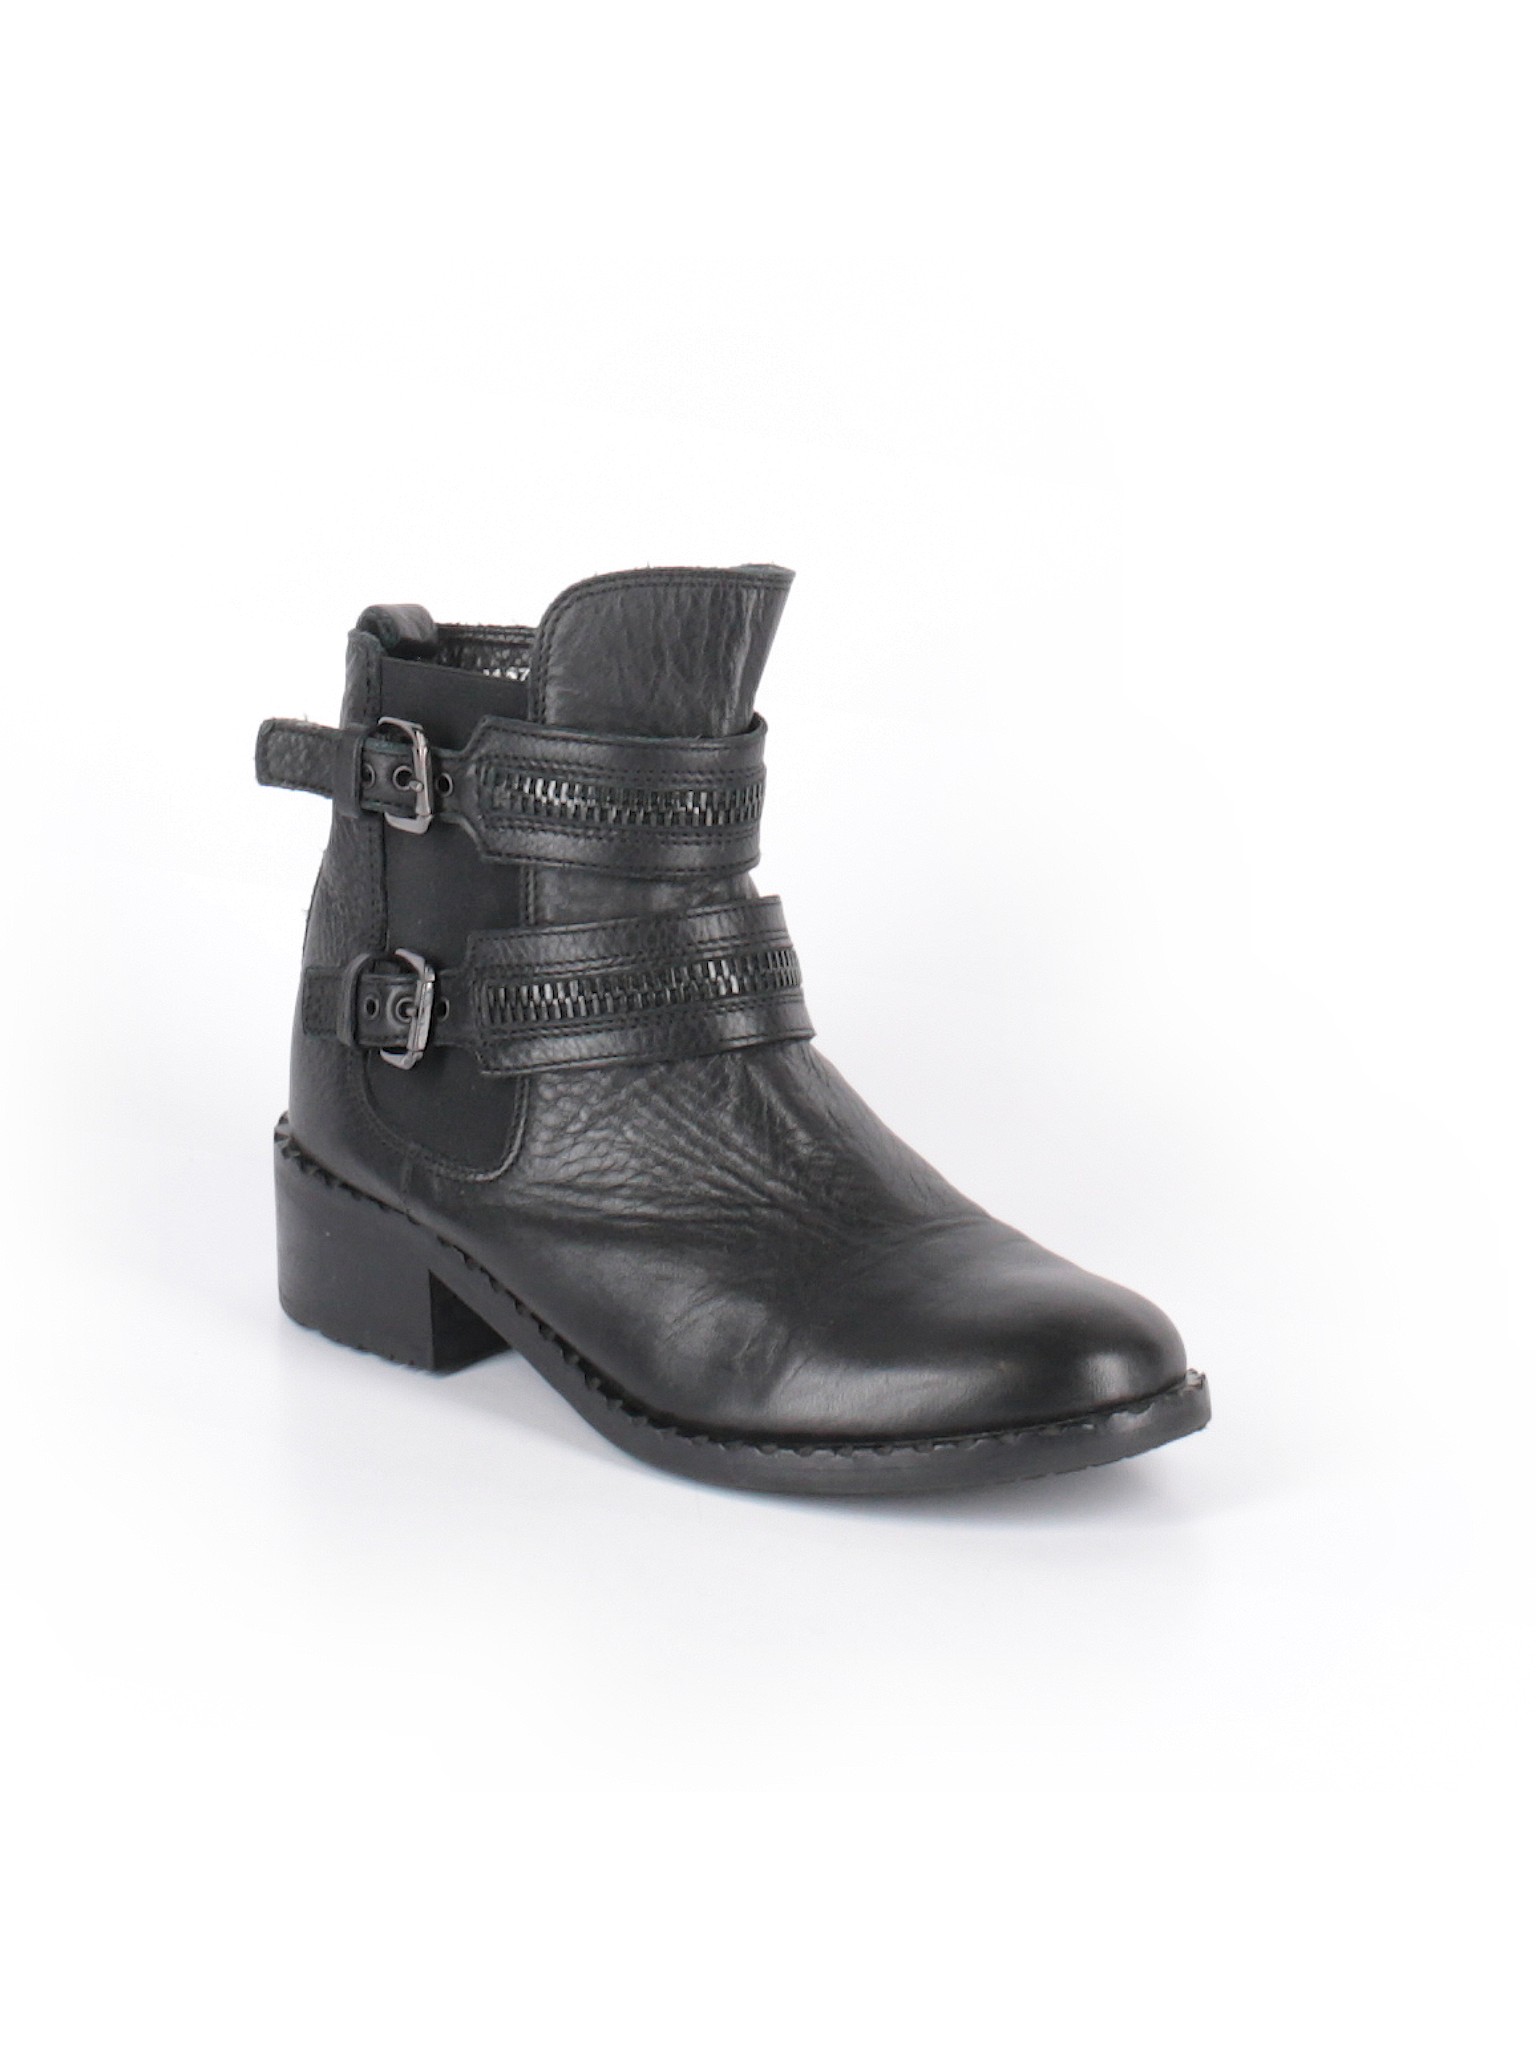 fabianelli leather boots